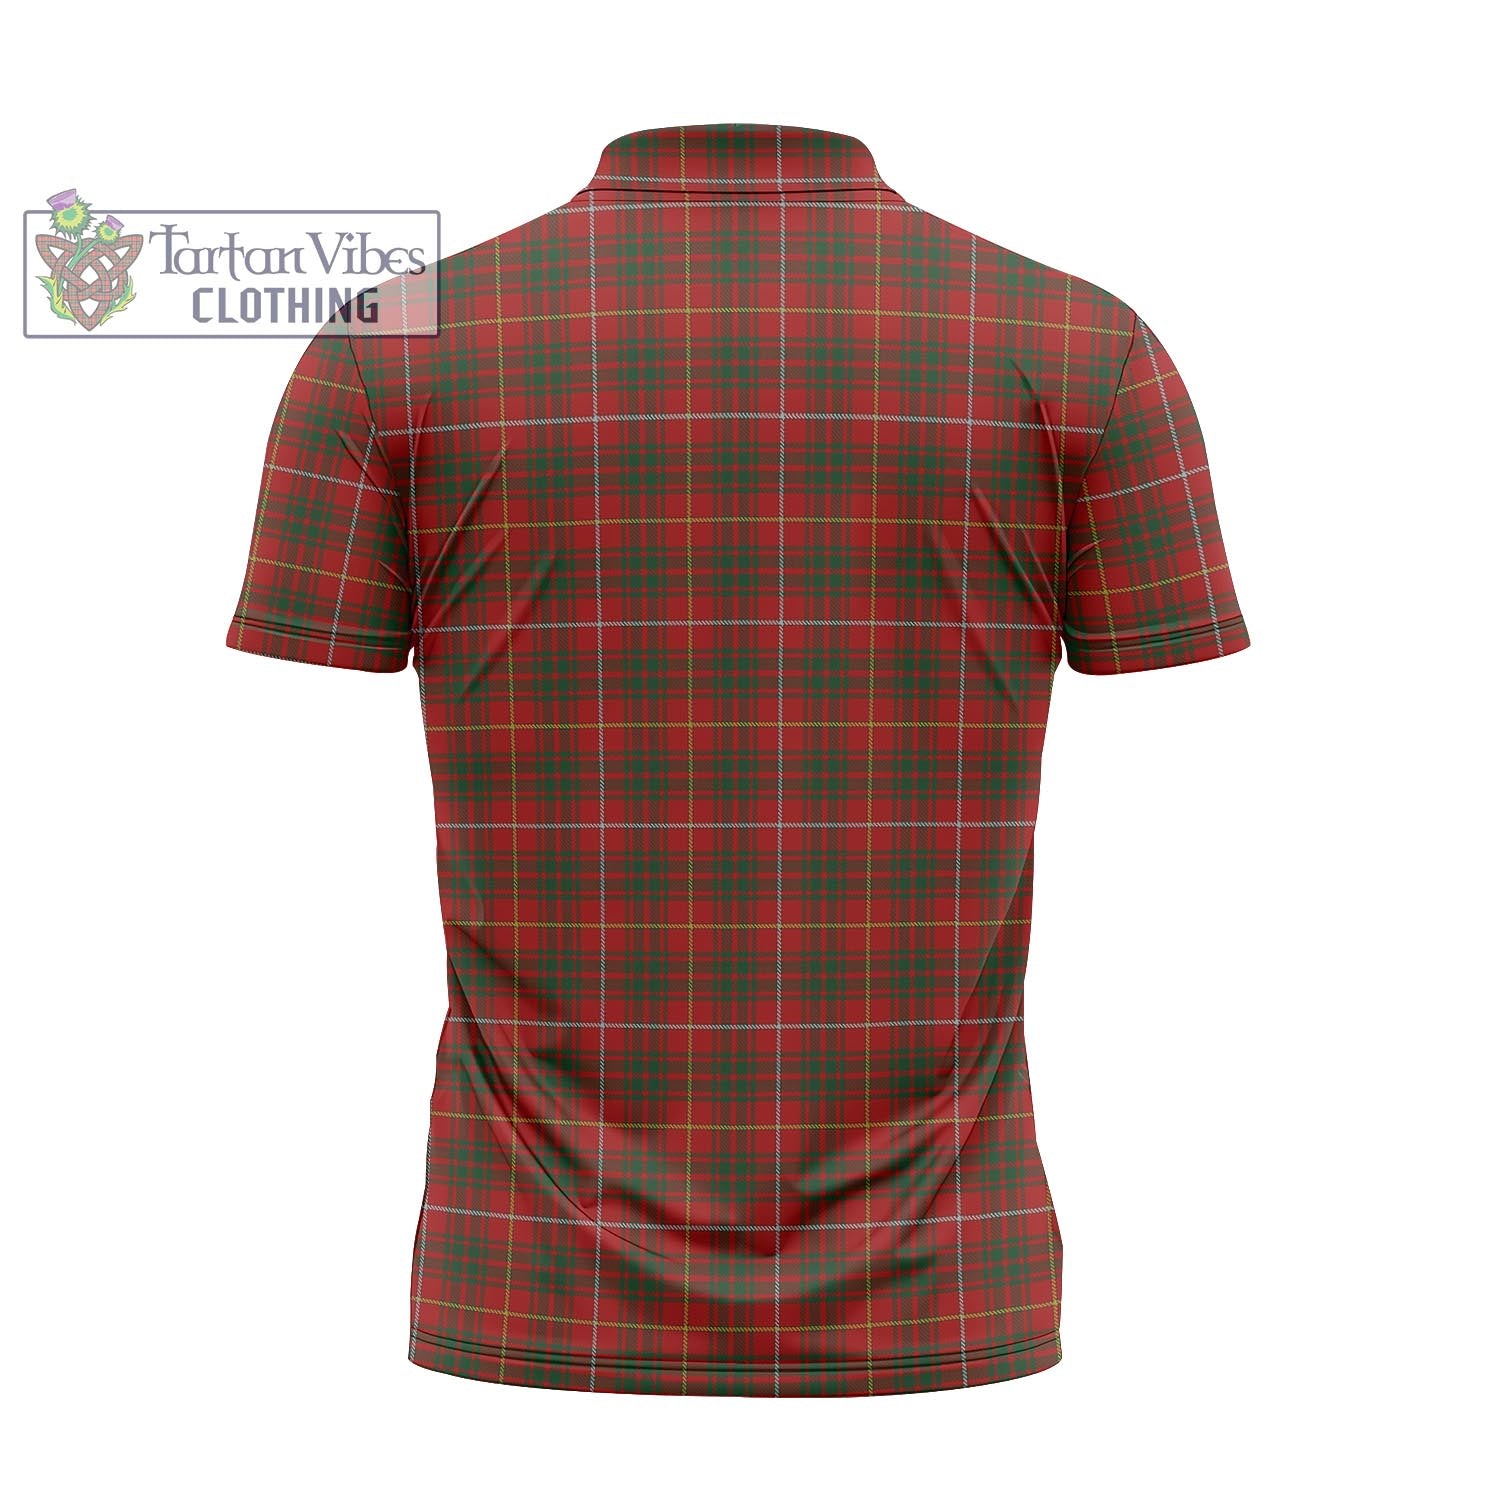 Tartan Vibes Clothing Bruce Tartan Zipper Polo Shirt with Family Crest